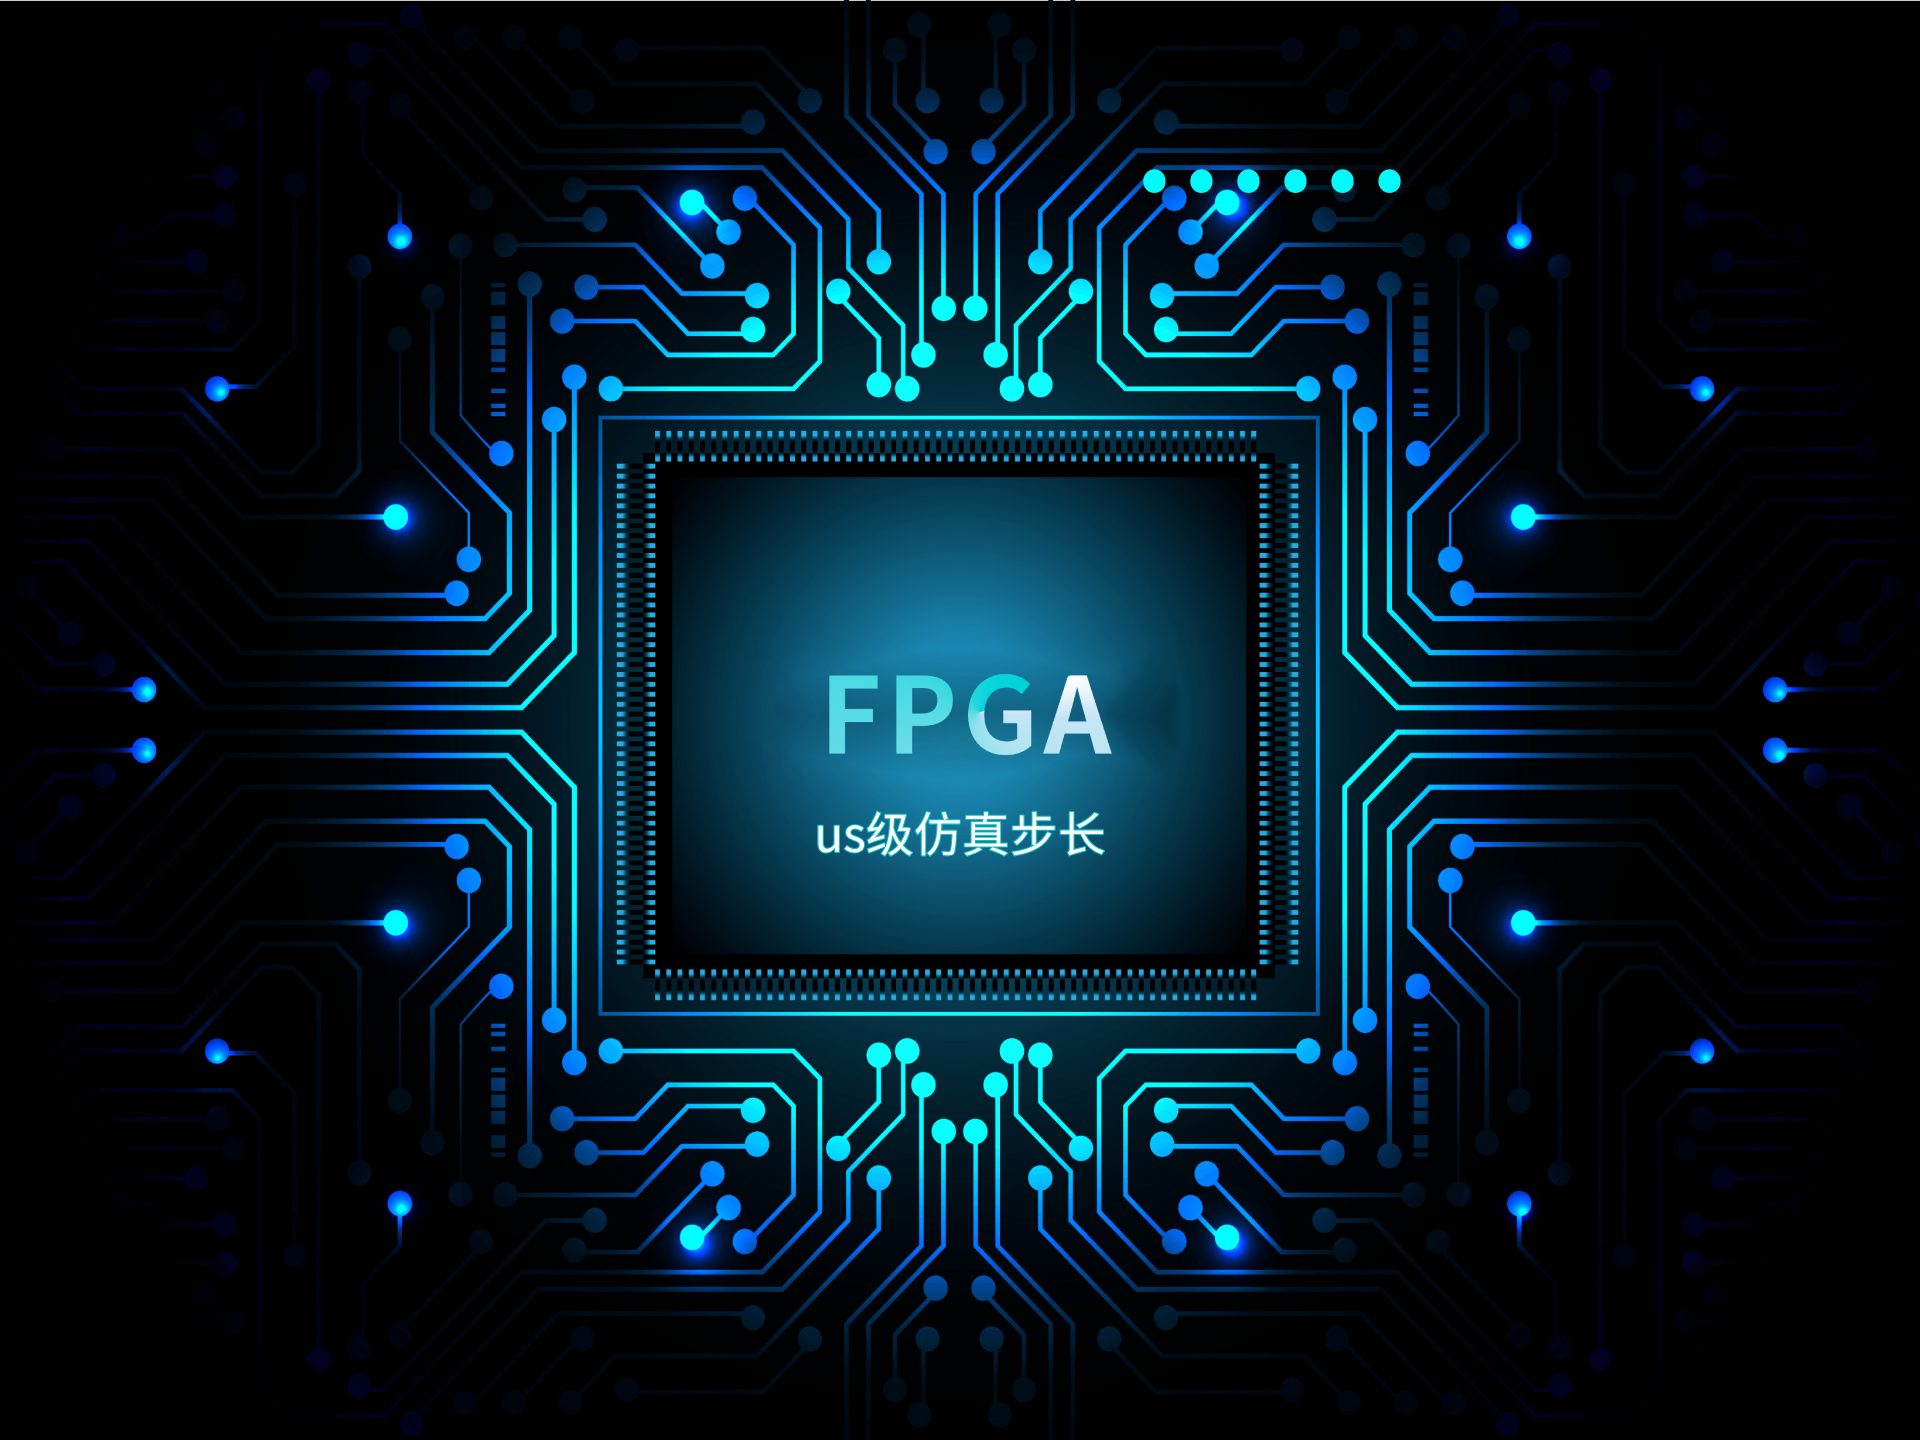 Superior FPGA simulation capability.